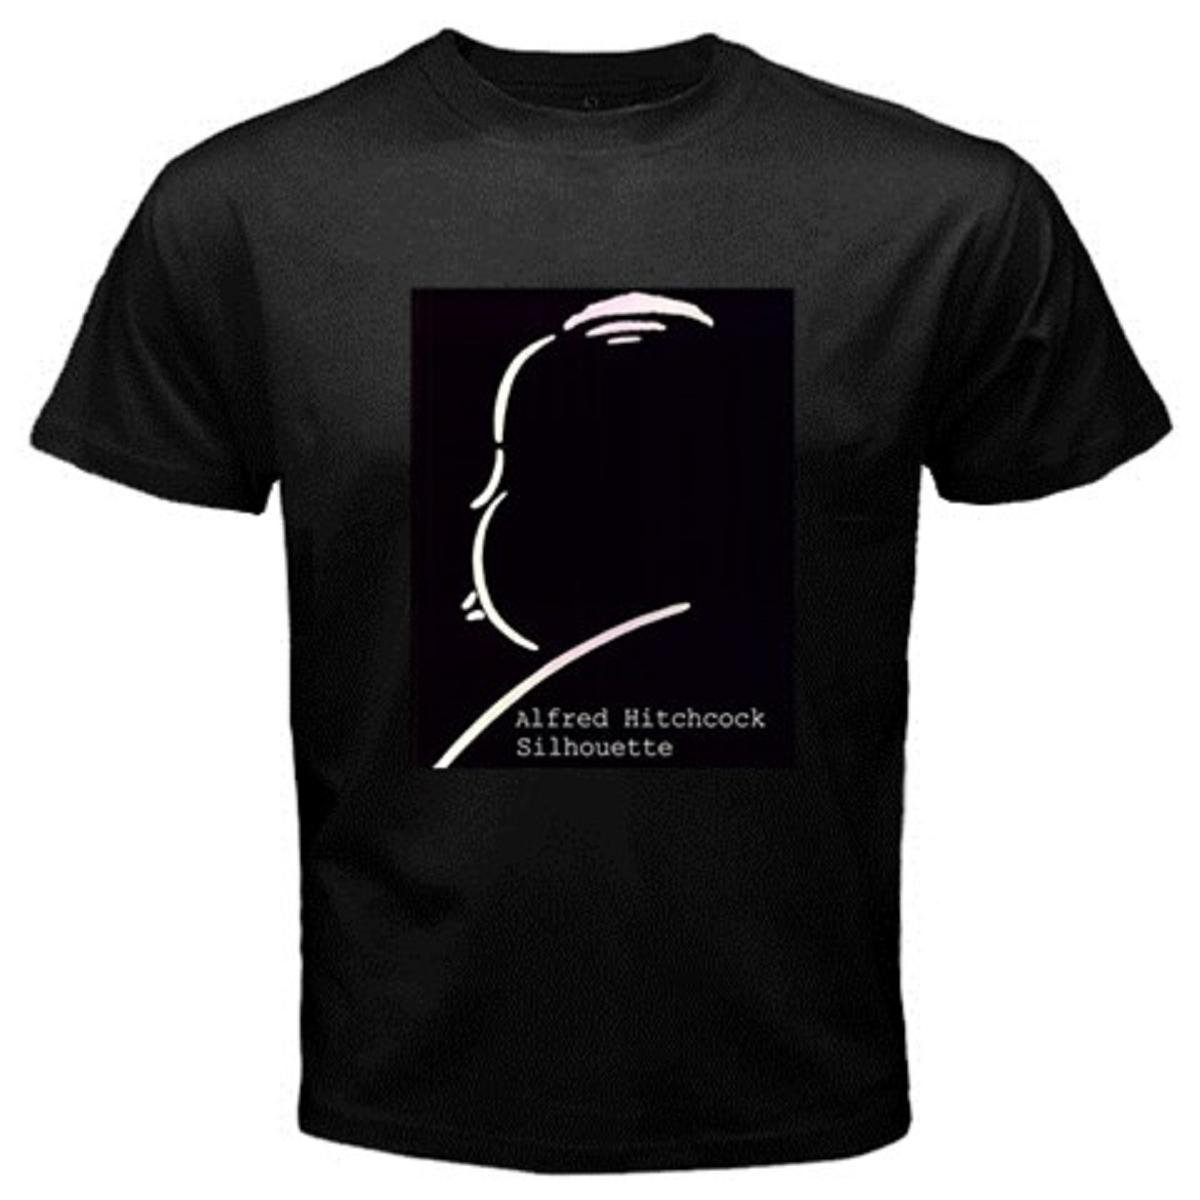 Hot Black Alfred Hitchcock silhouette black t-shirt black t-shirt.